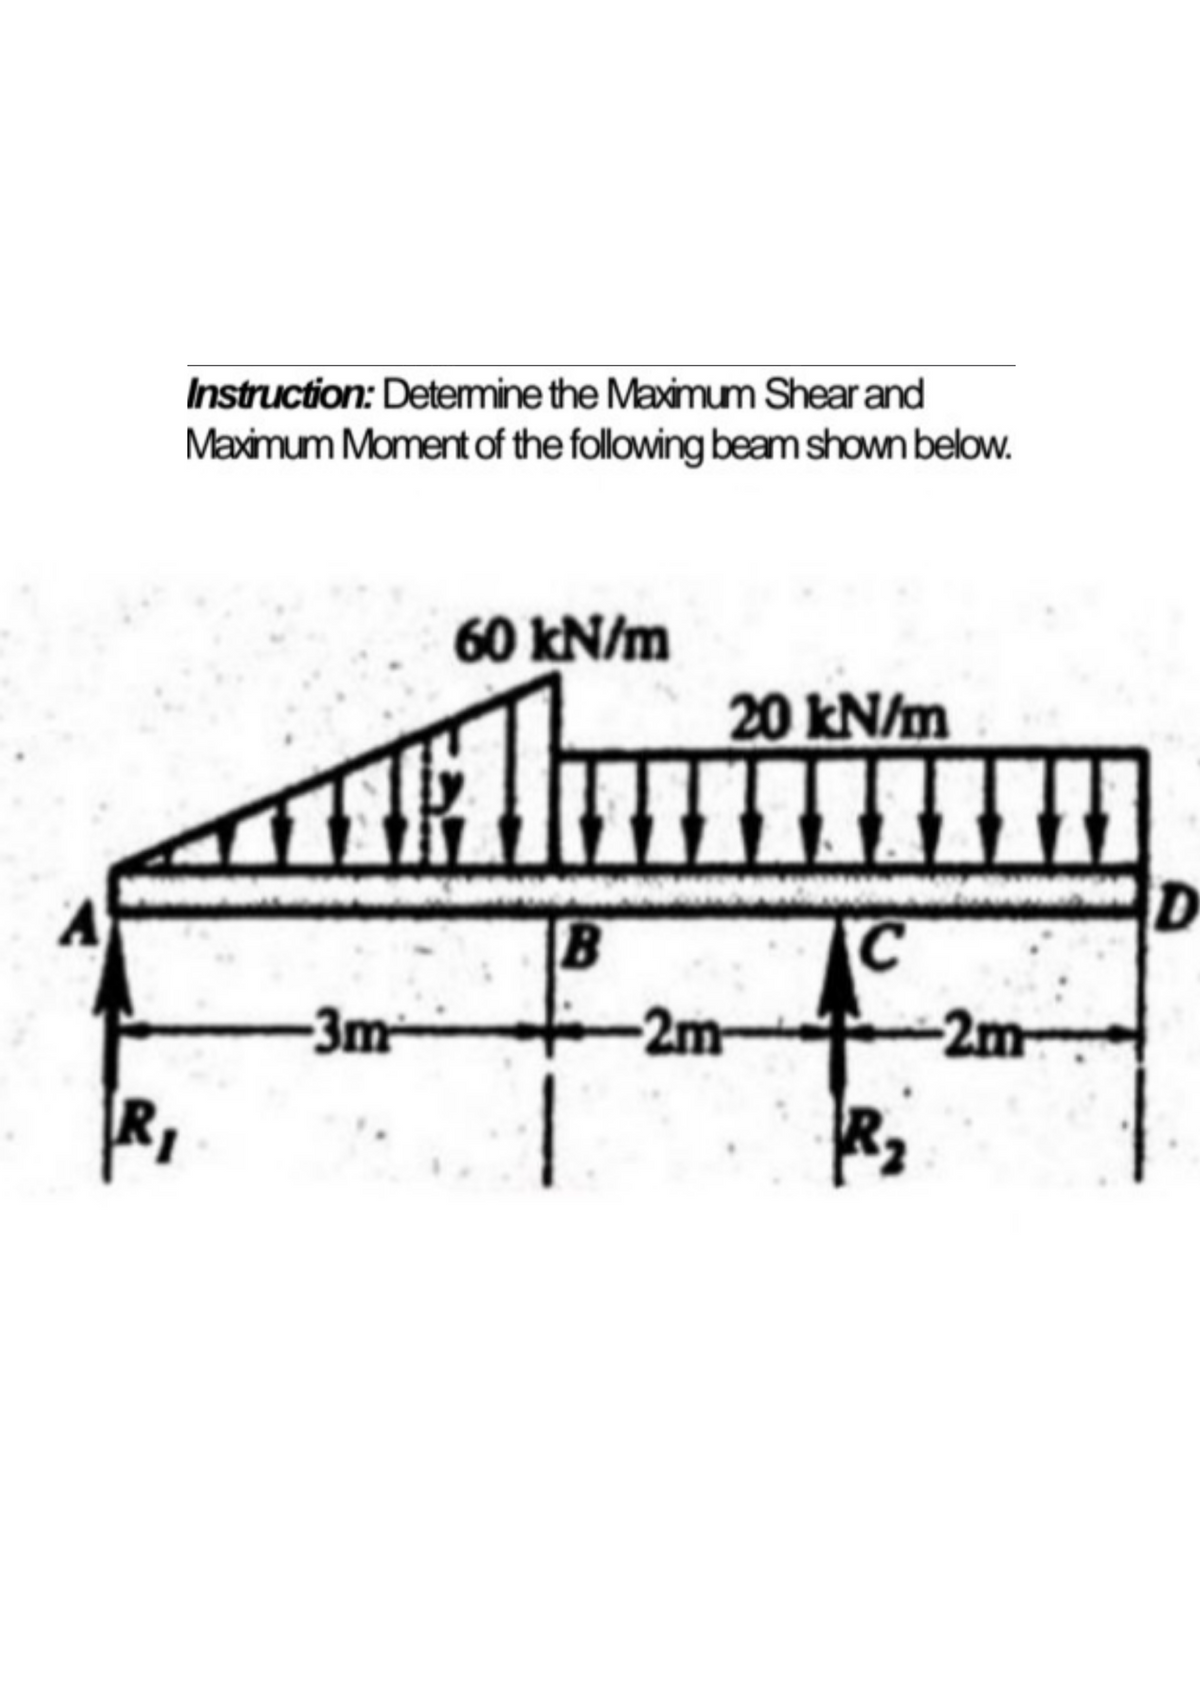 Instruction: Determine the Maximum Shear and
Maximum Moment of the following beam shown below.
60 kN/m
20 kN/m
C
Th
B
-3m
2m
-2m
D